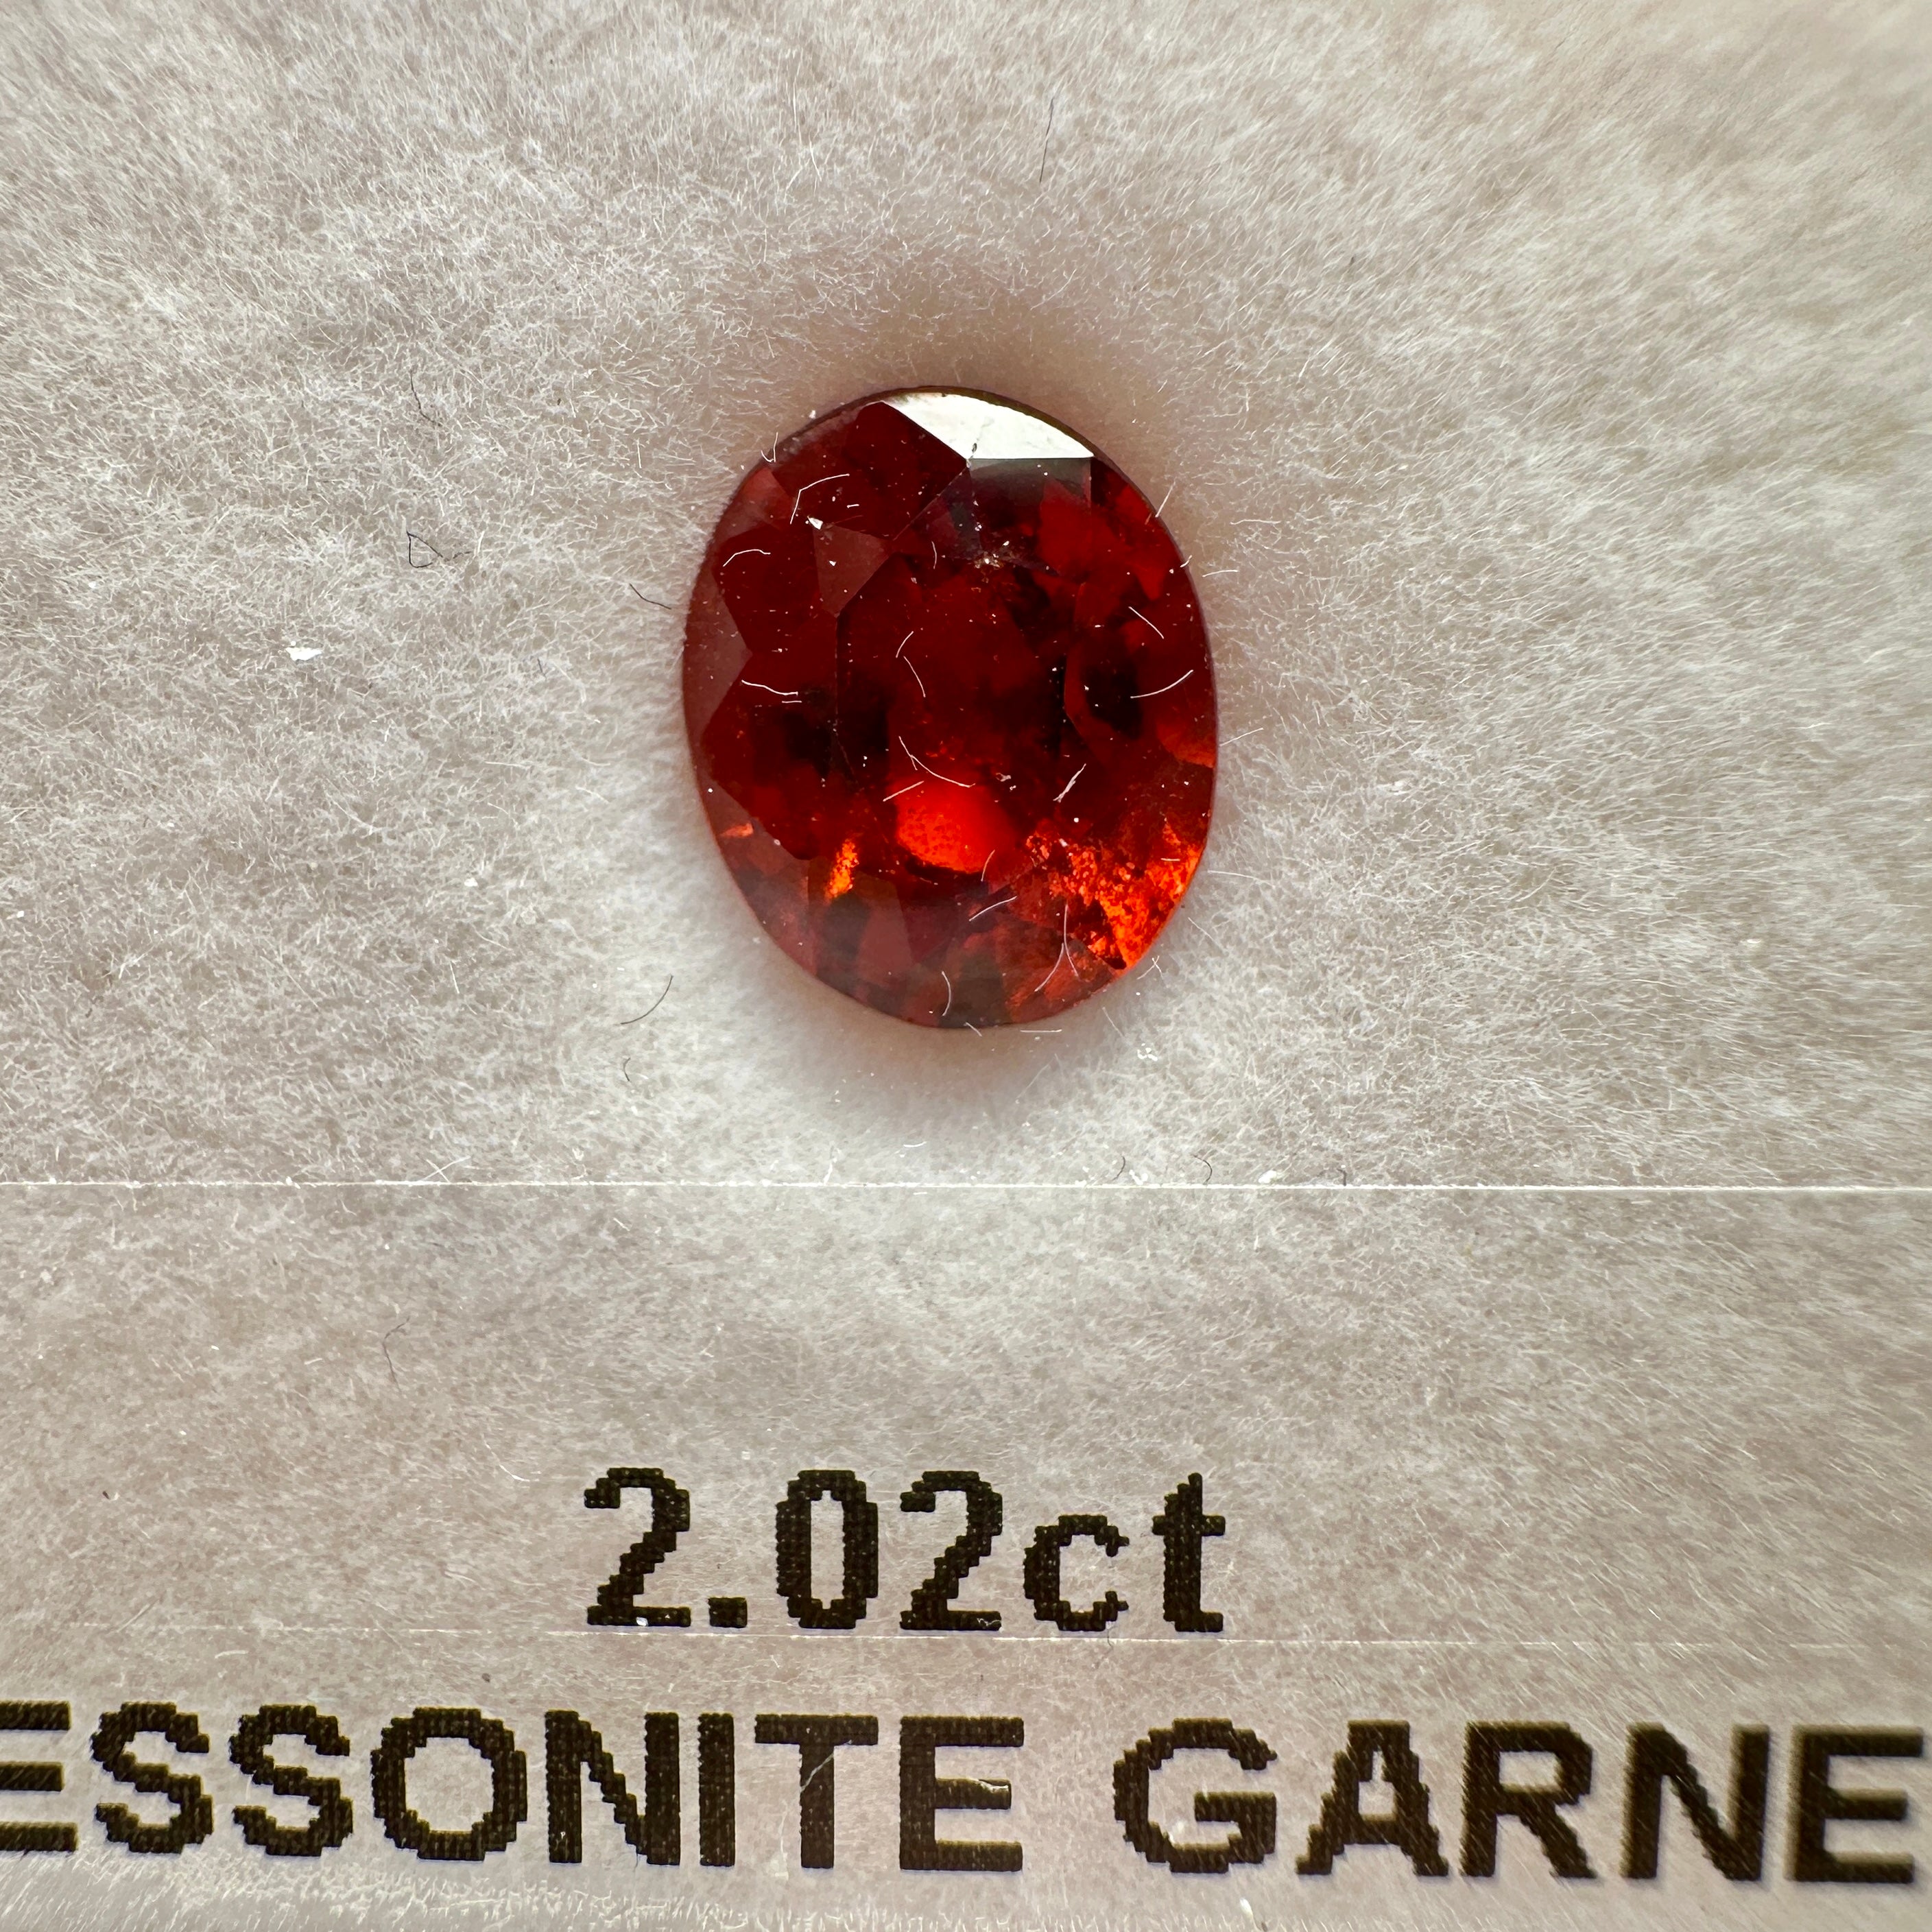 2.02ct Hessonite Garnet, Untreated Unheated, native cut